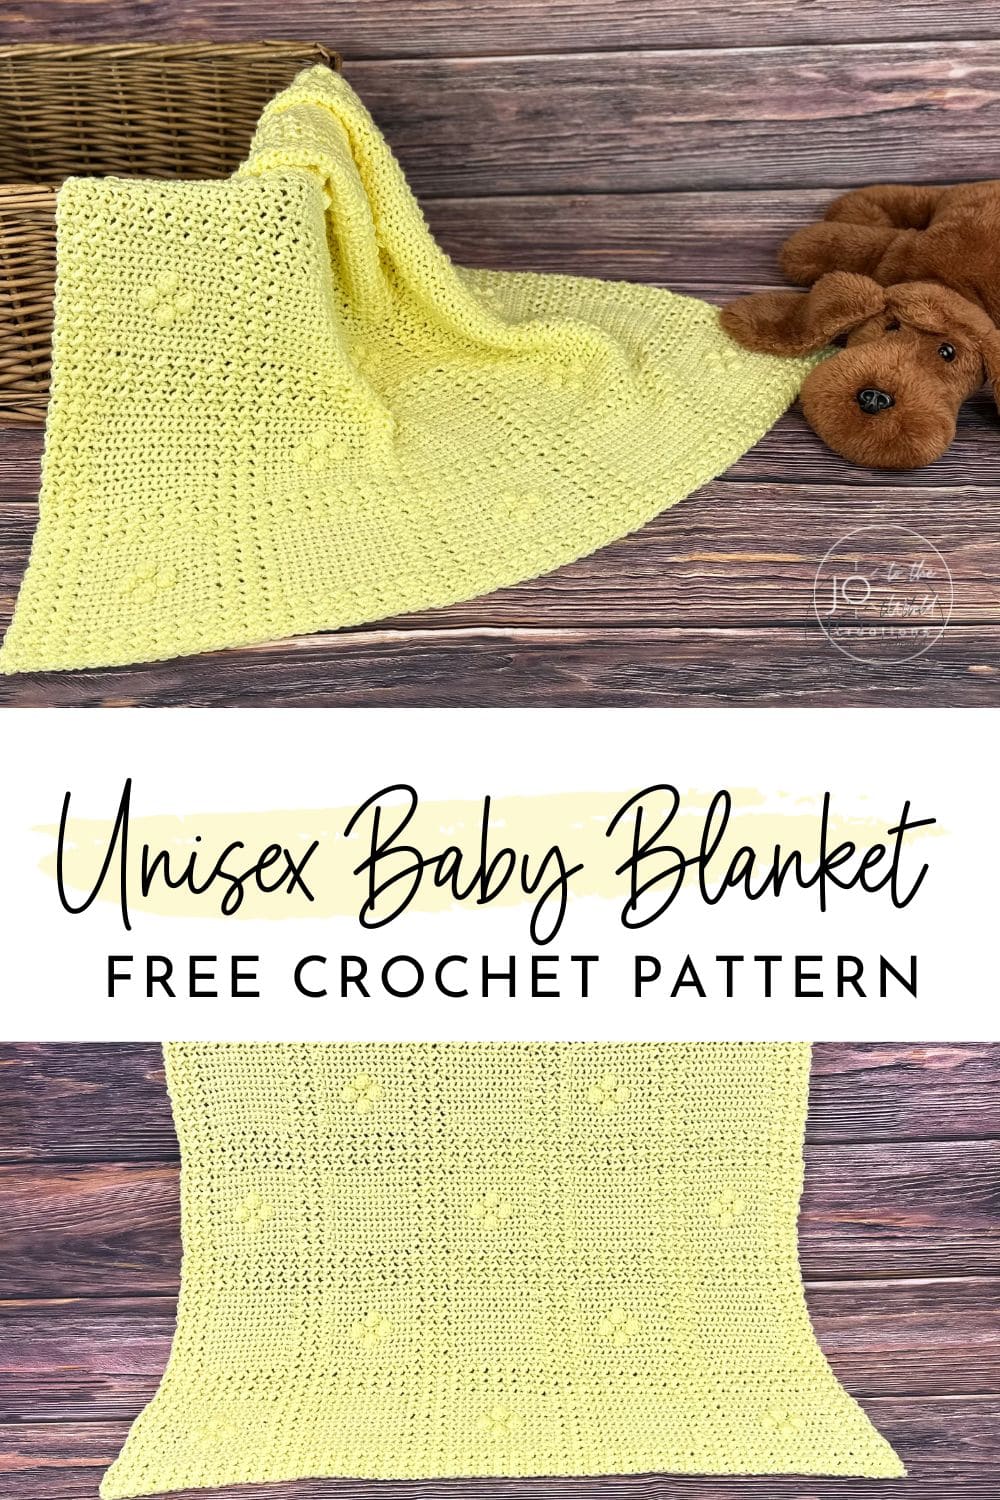 Gender neutral crochet baby blanket pattern free